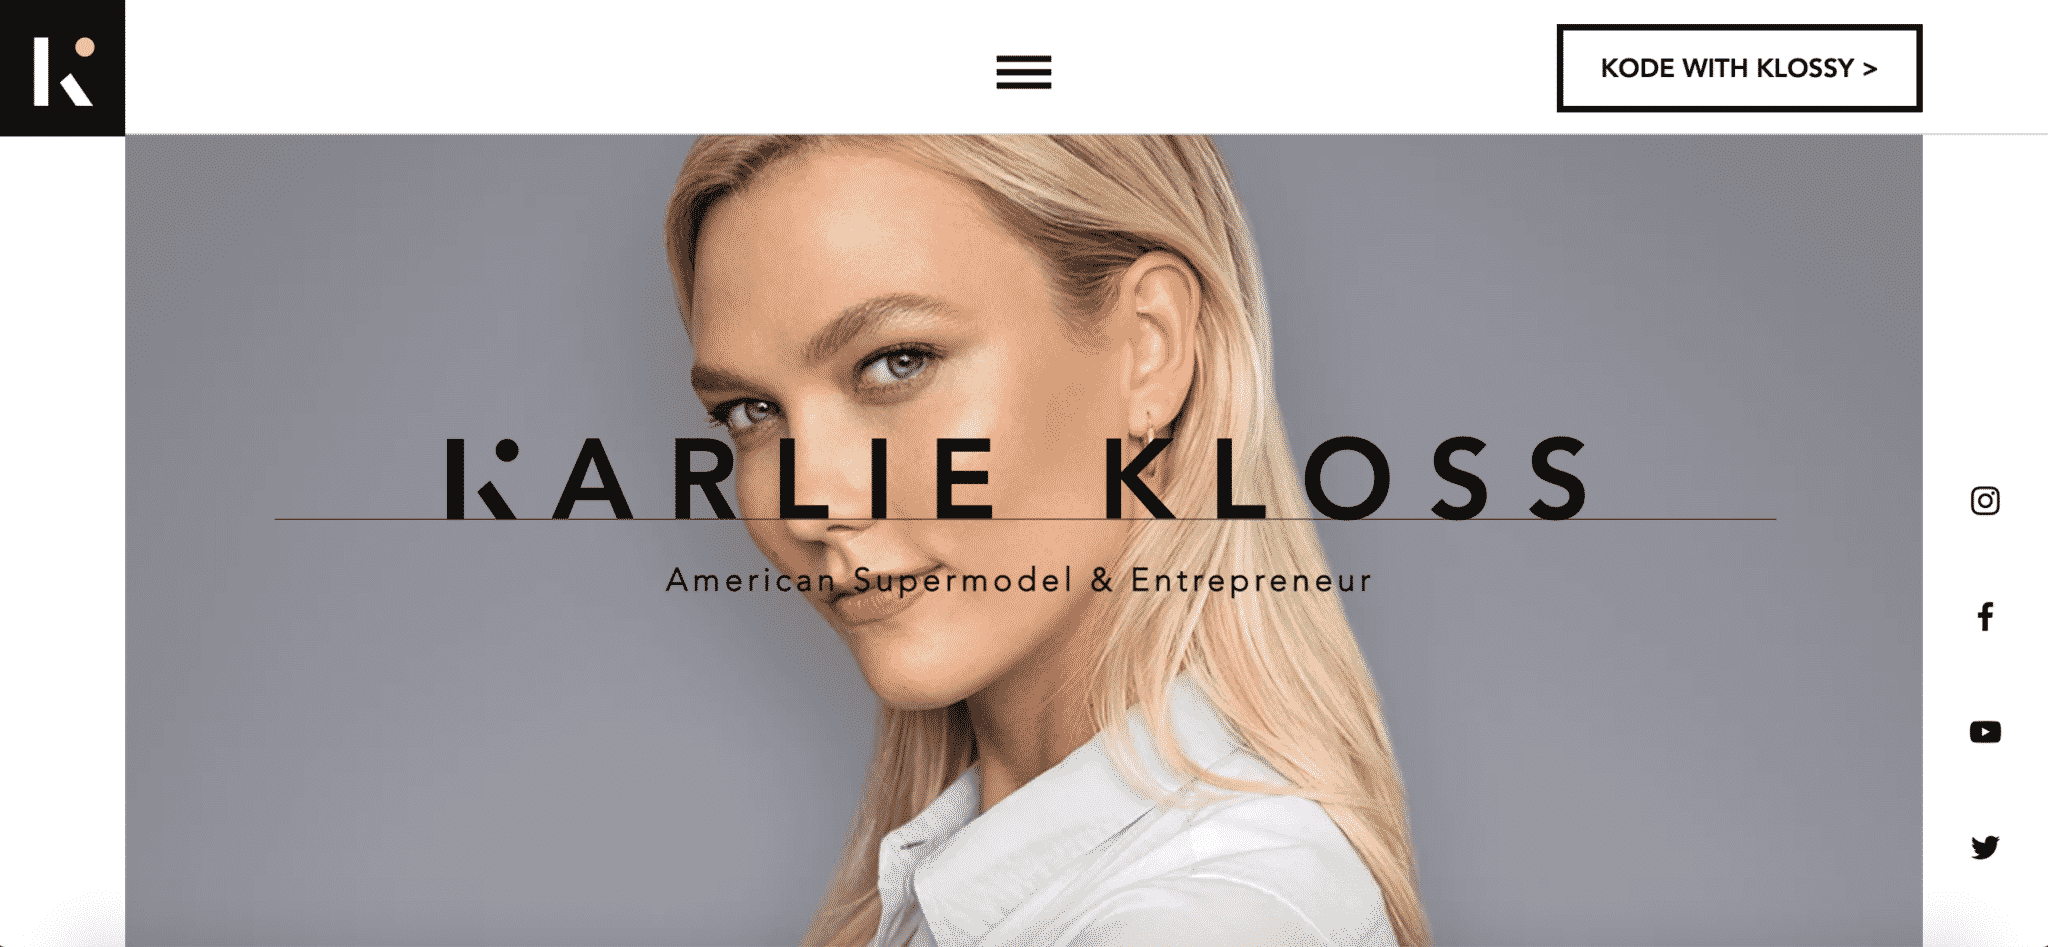 Karlie Kloss exemples de sites portfolio Wix